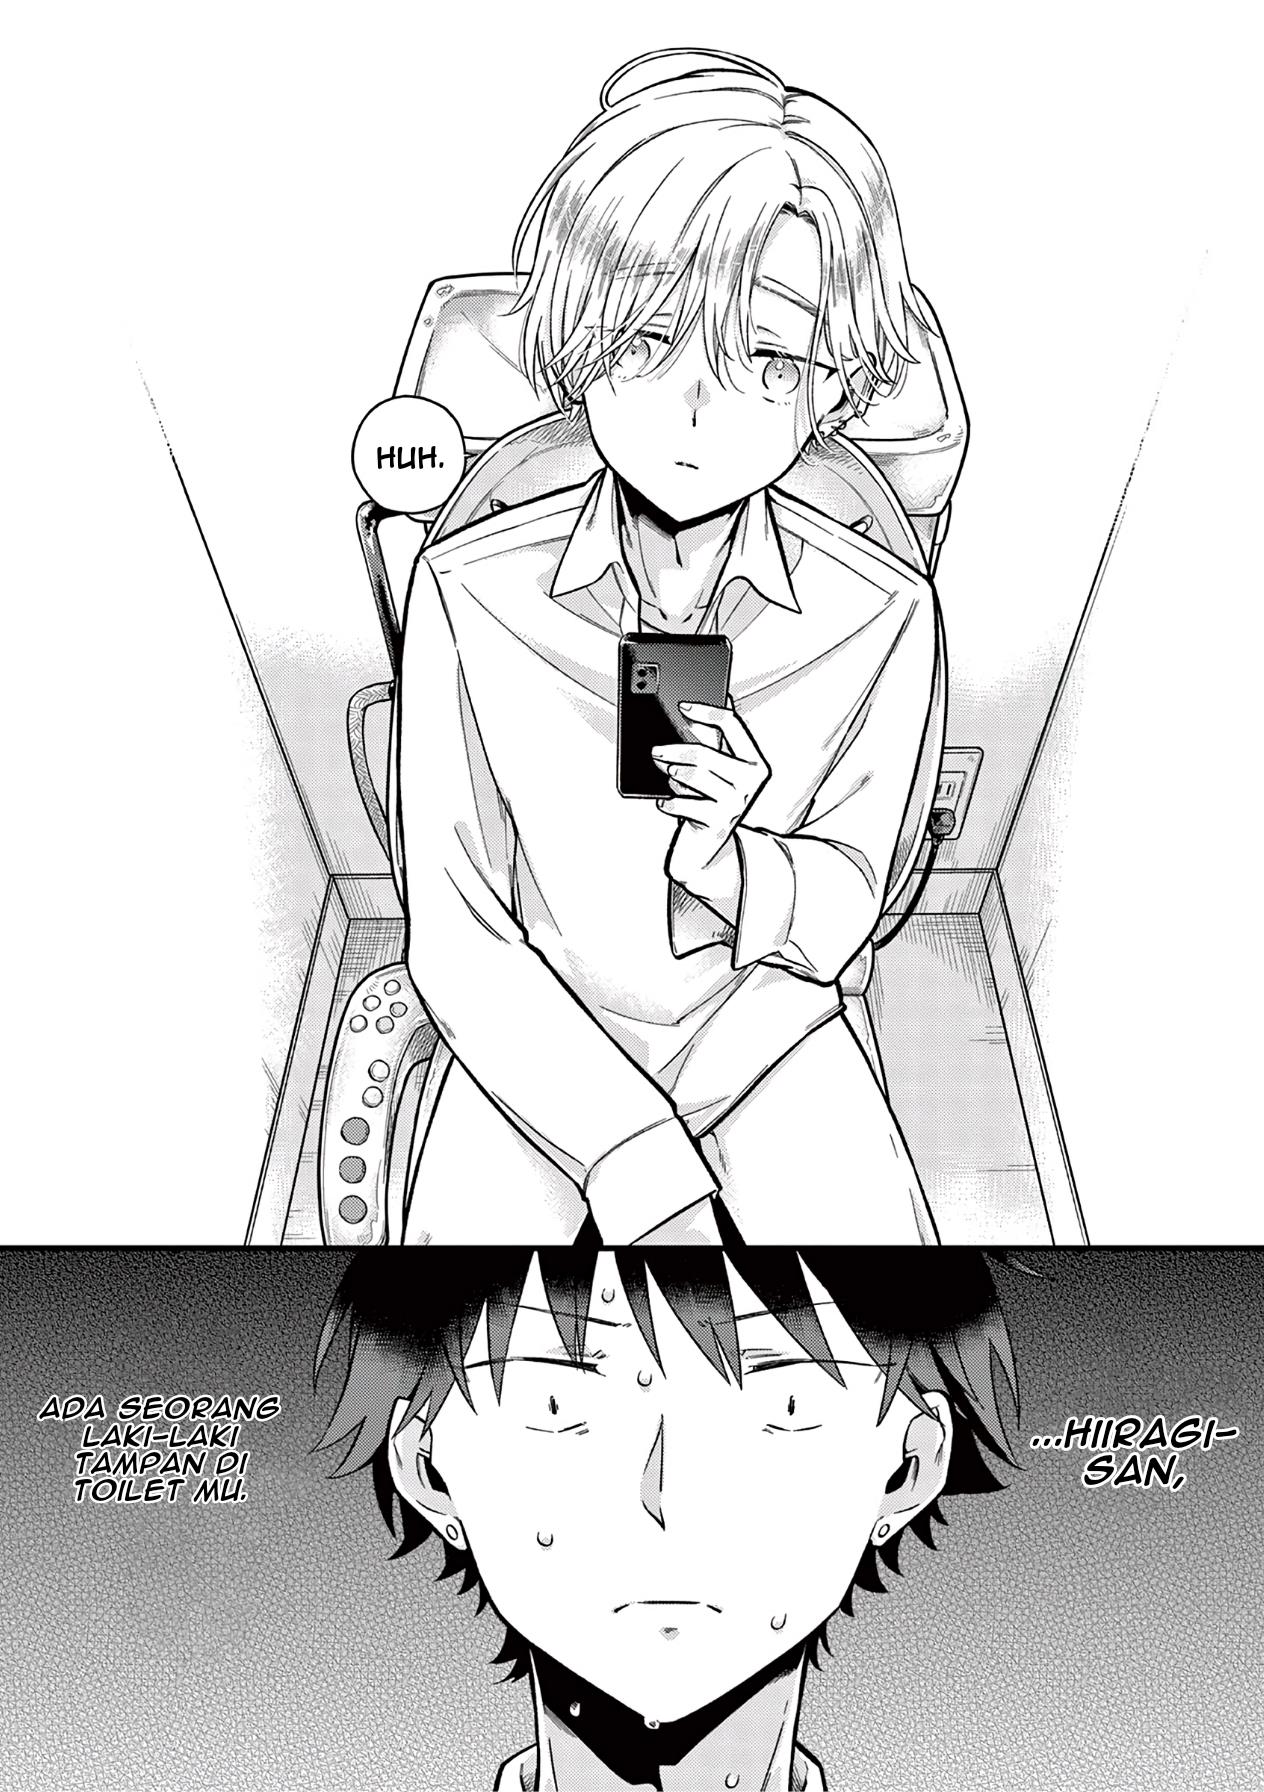 Hiiragi-san is A Little Careless Chapter 7